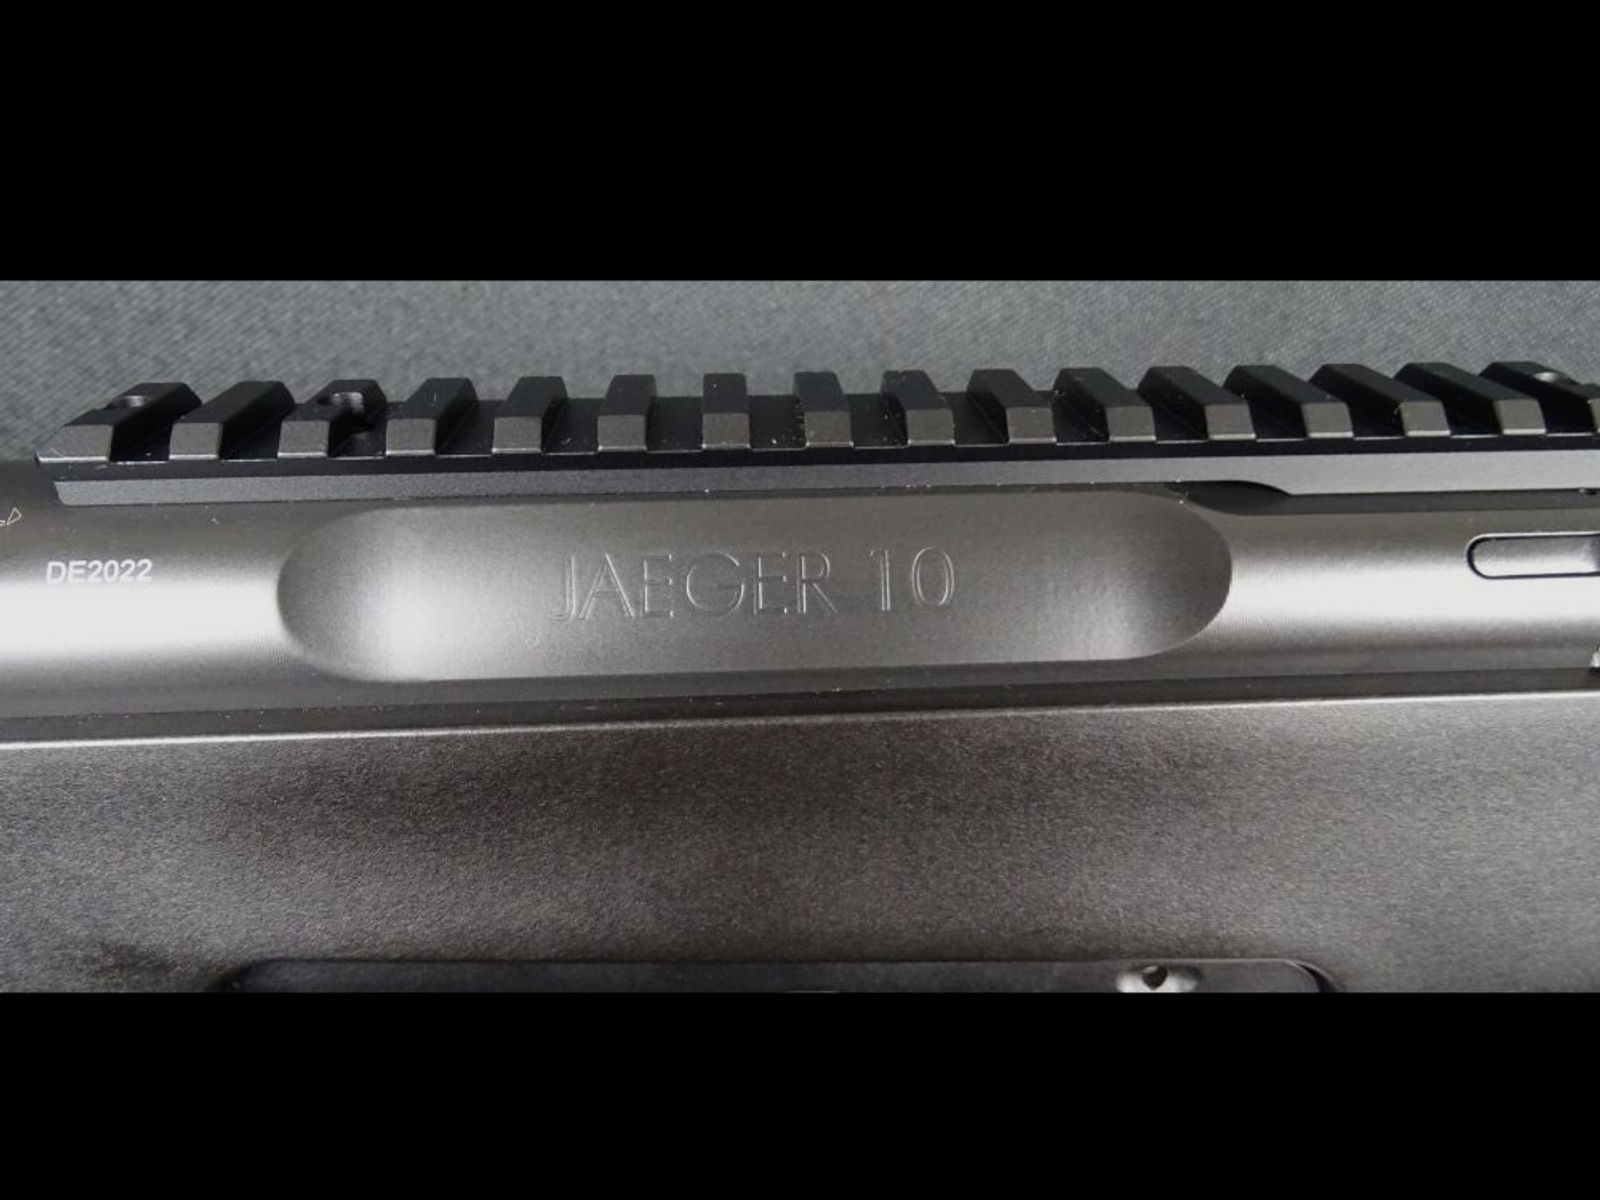 Haenel	 Jäger 10 Pro Compact